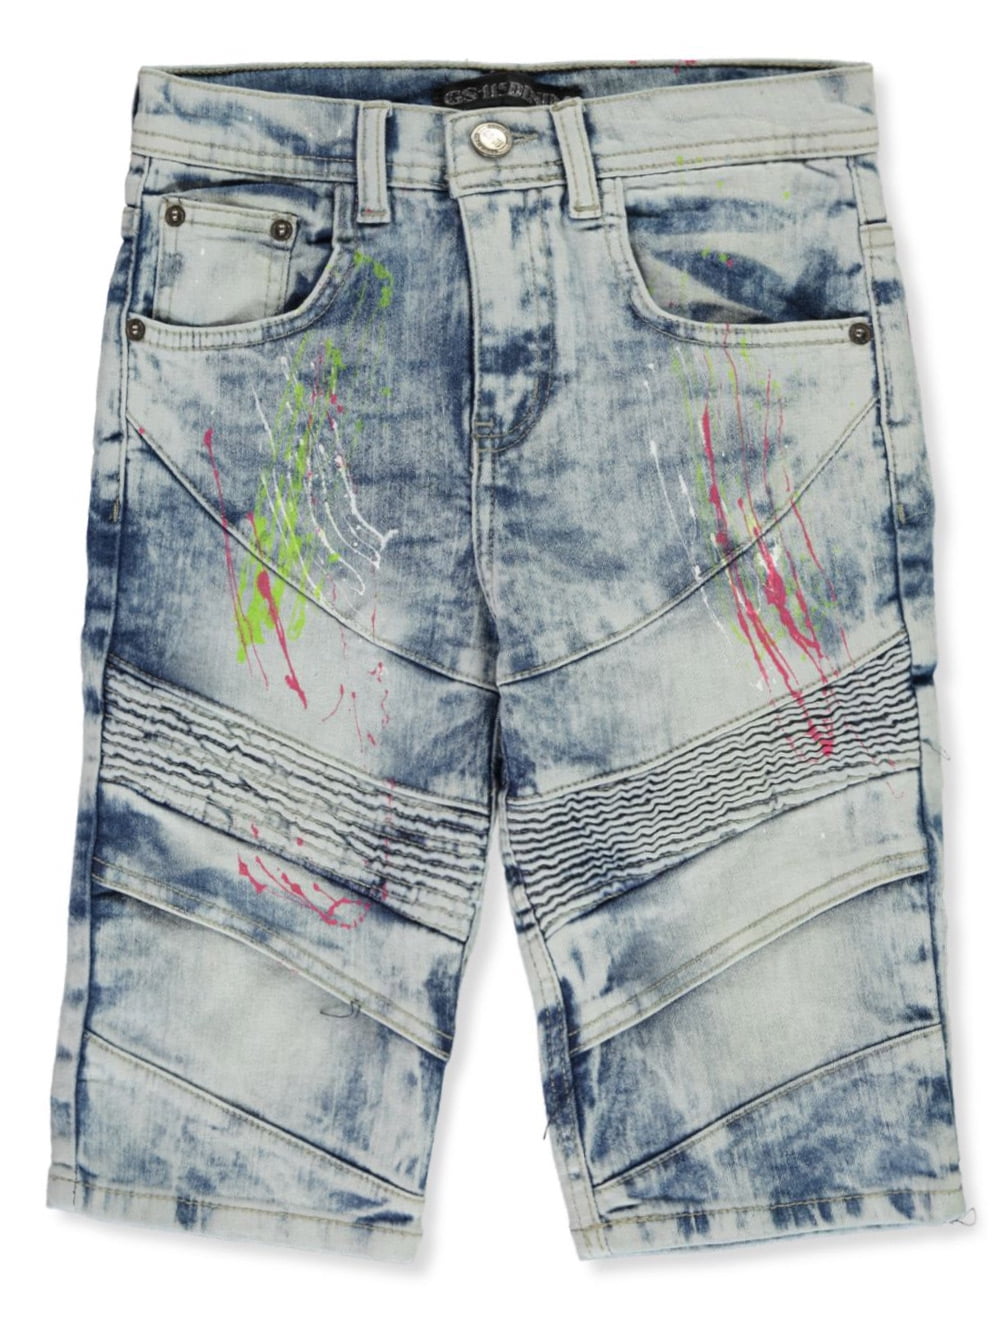 URBANCREWS Mens Hipster Hip Hop Casual Summer Fashion Denim Jeans Shorts